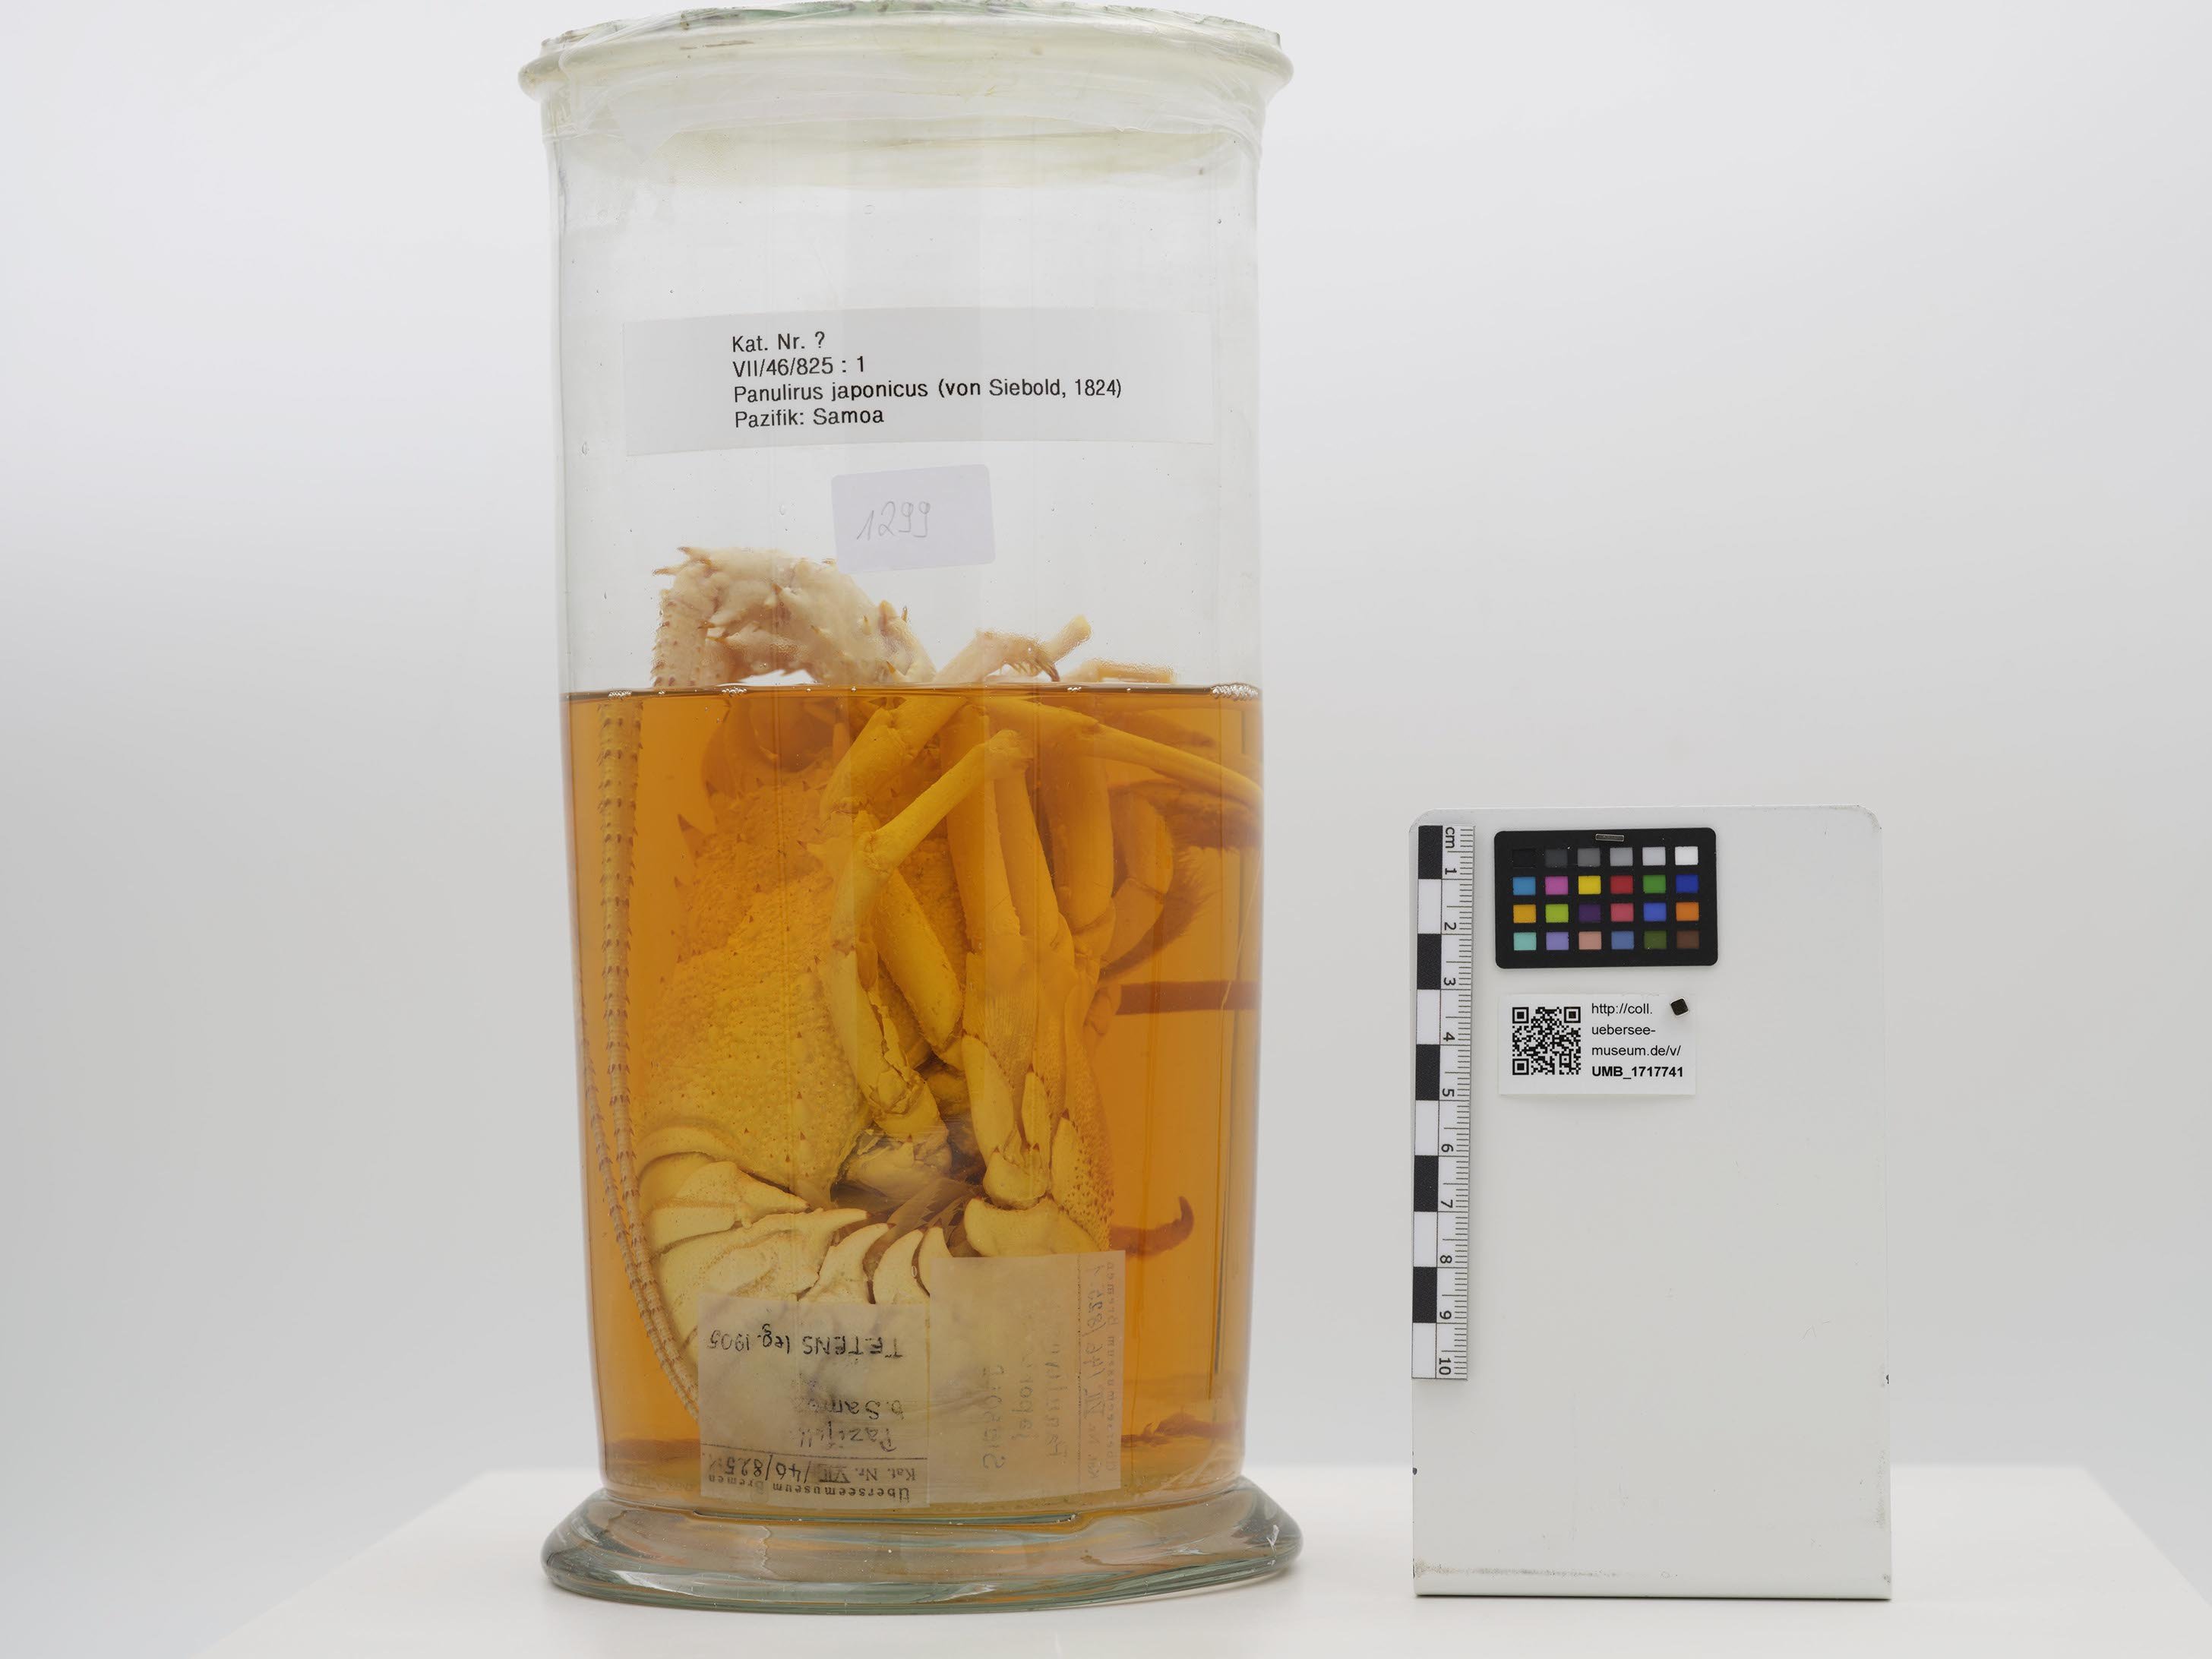 UMB_1717741 | Panulirus japonicus, Japanische Languste | ganzer Organismus (Übersee-Museum Bremen CC BY-NC-SA)